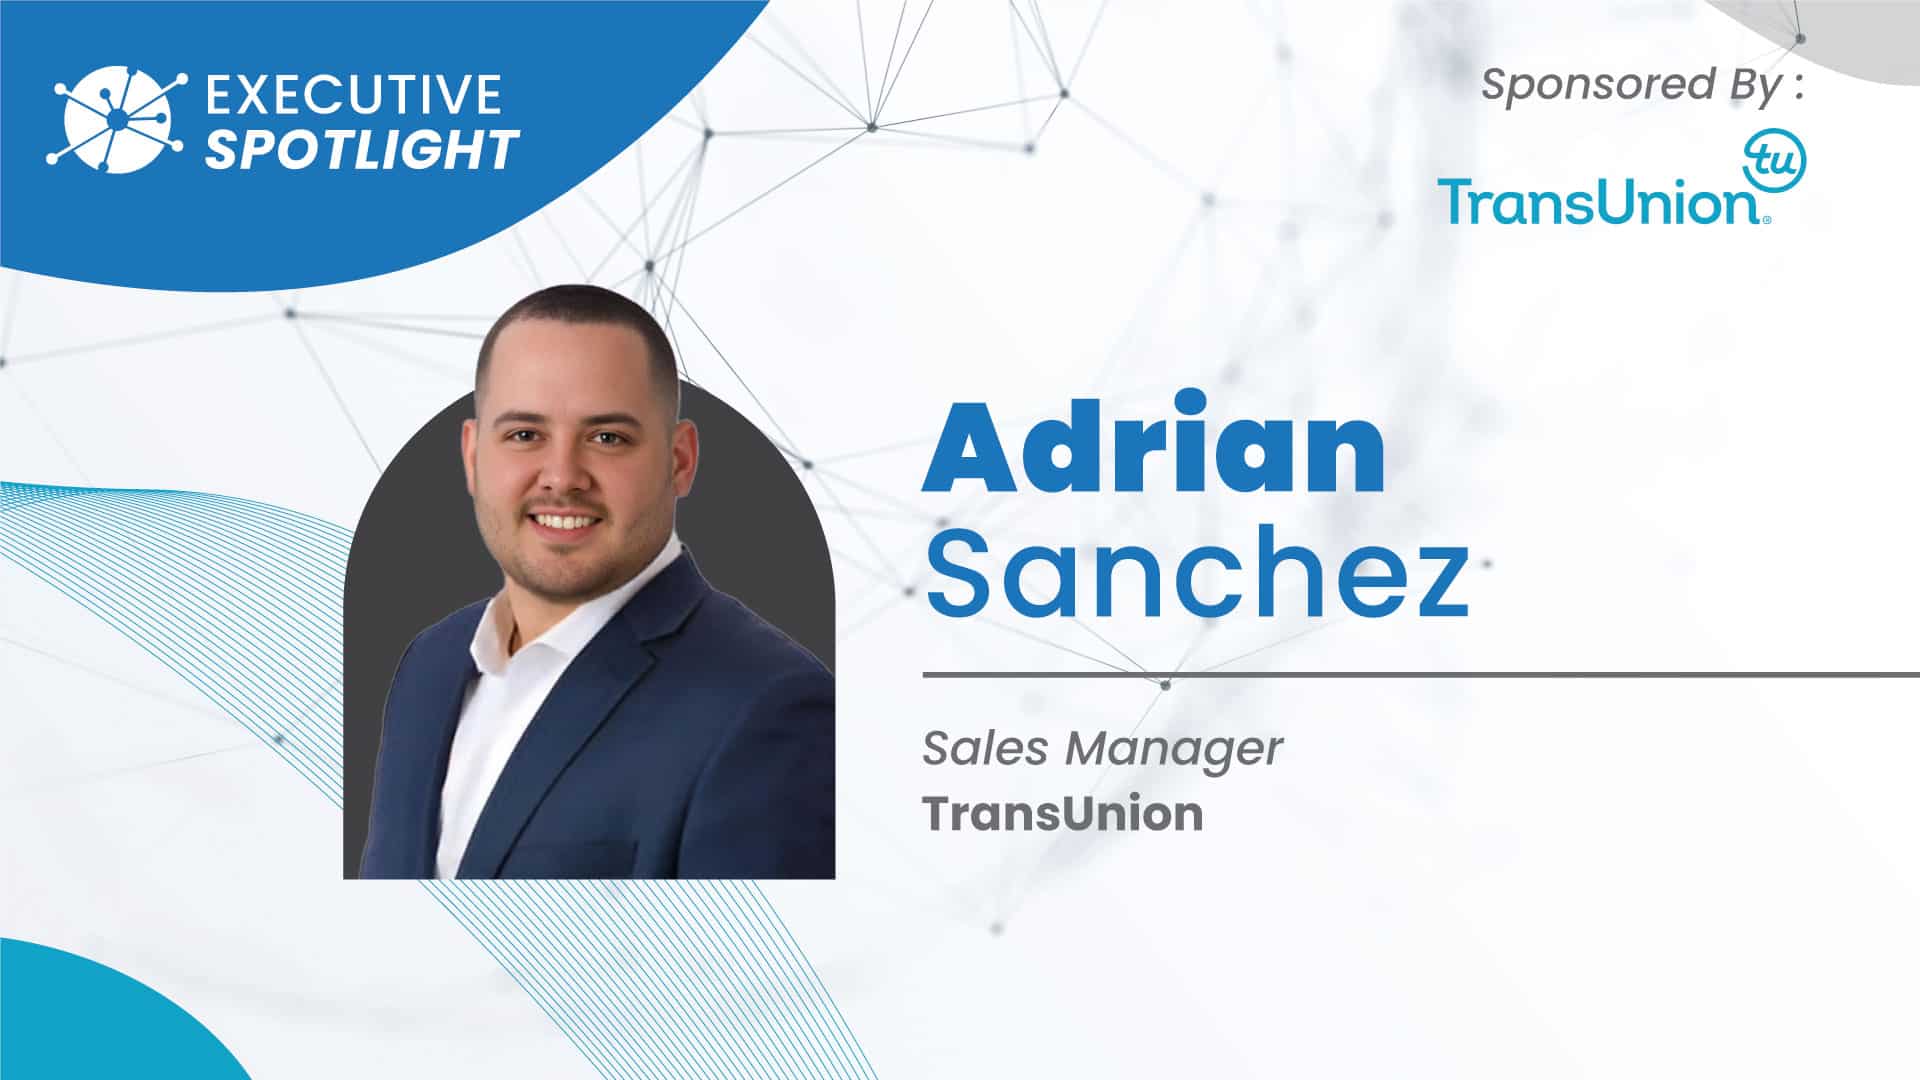 Executive Spotlight with Adrian Sanchez